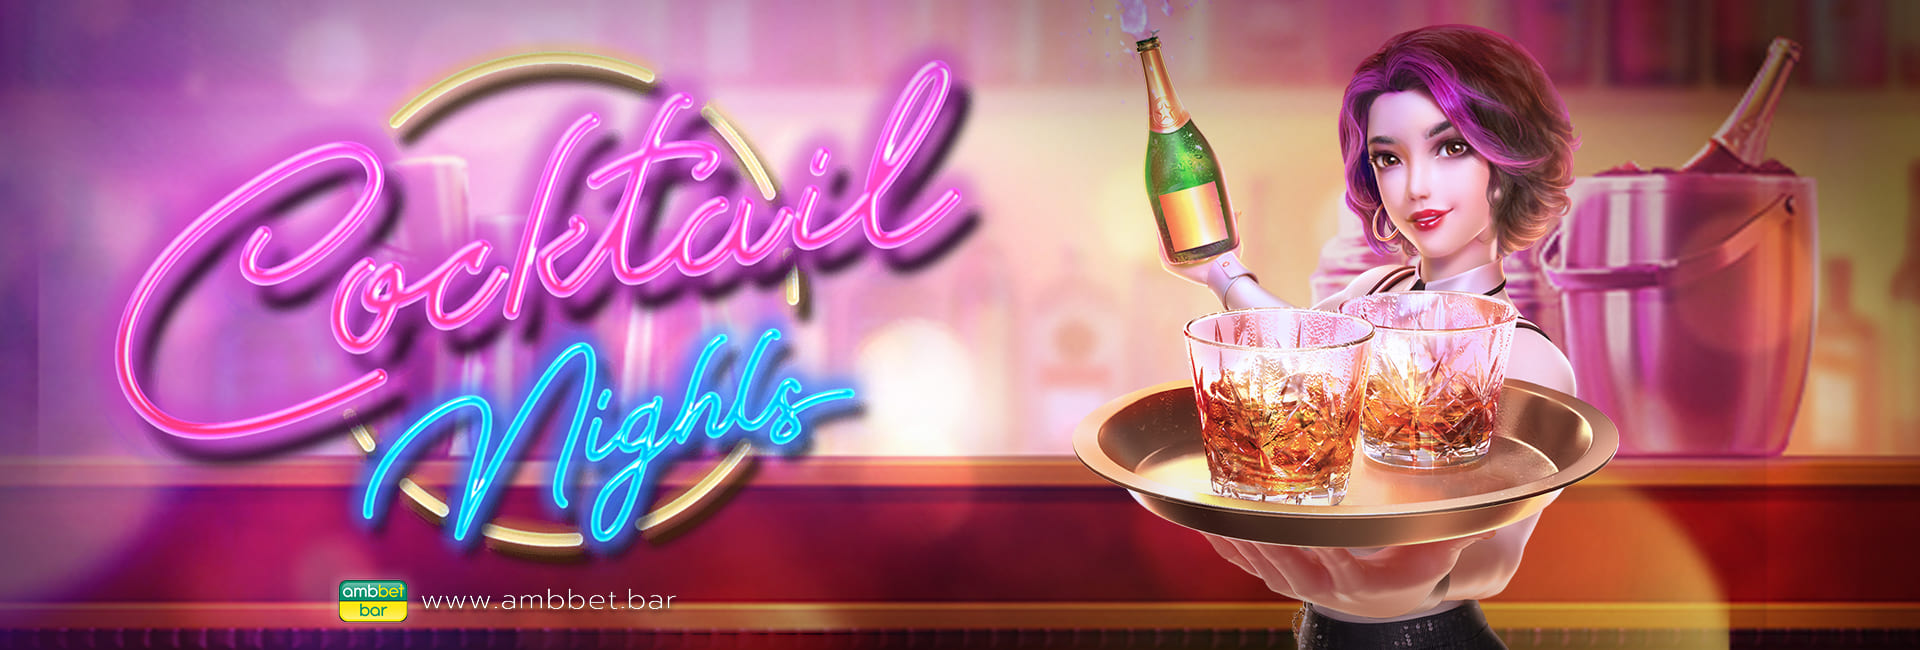 Cocktail Nights banner